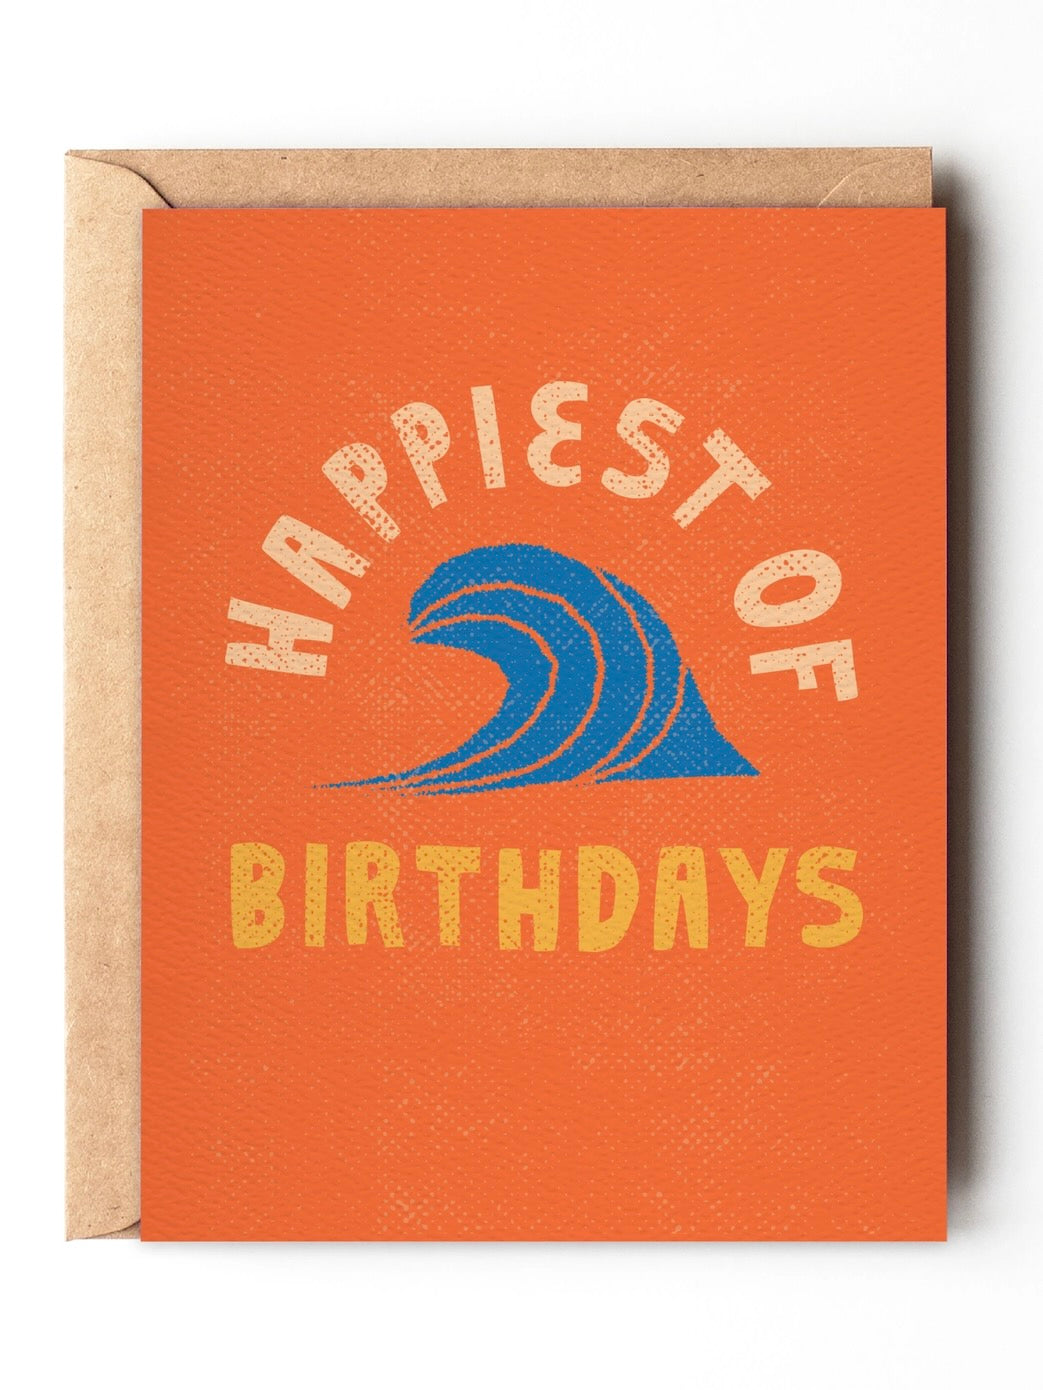 HAPPIEST OF BIRTHDAYS CARD